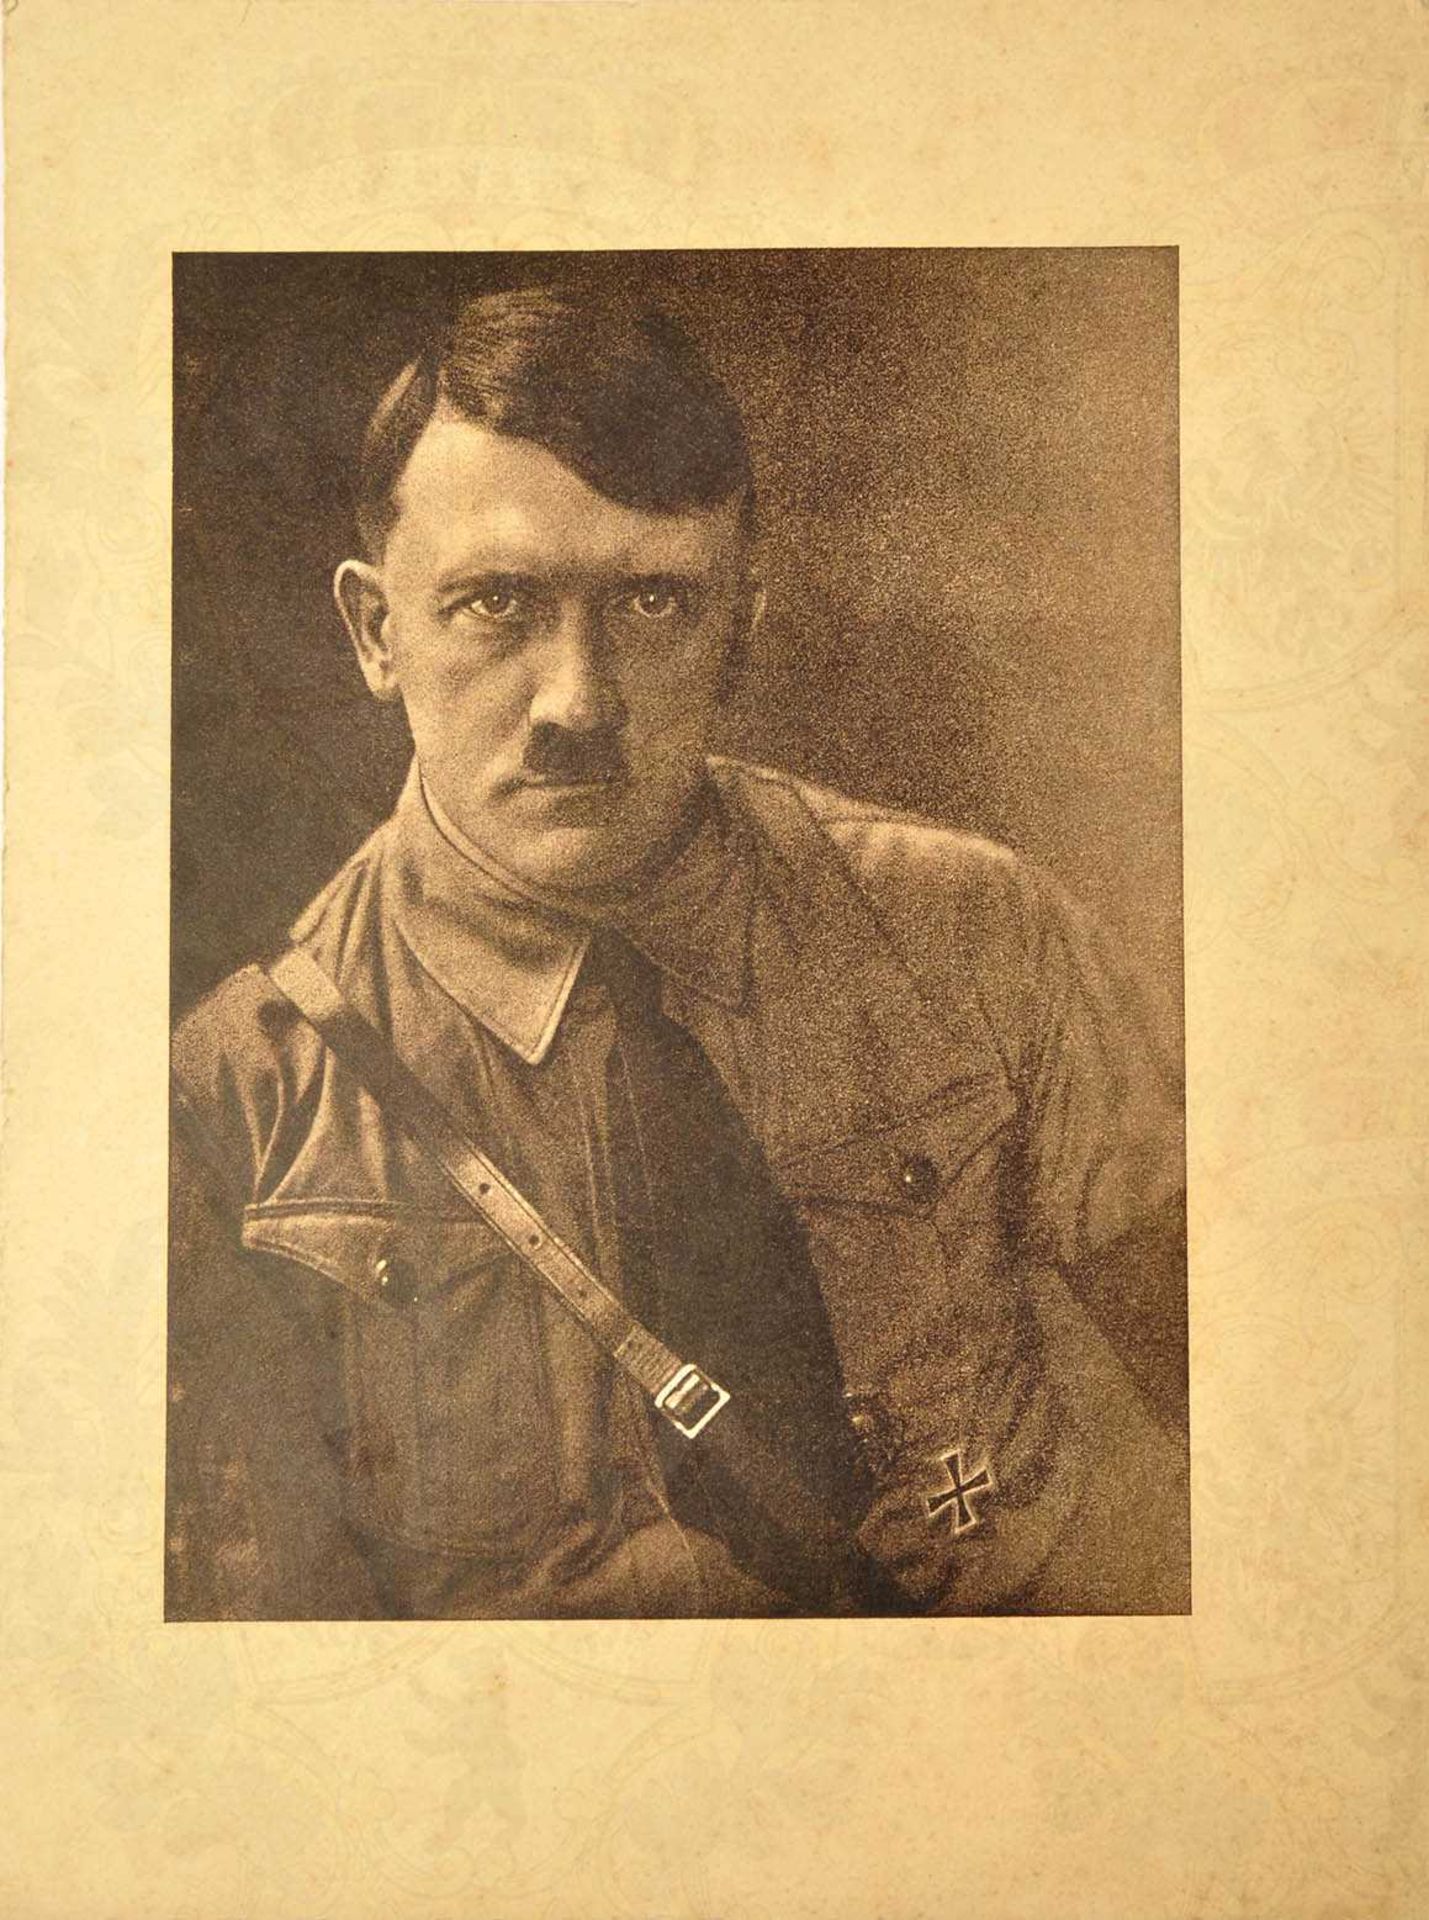 PROGRAMM DER NSDAP 1928, großf. Doppelblatt m. Portr. A. Hitler, 25 Punkte d. Progr. v. 1920 m.